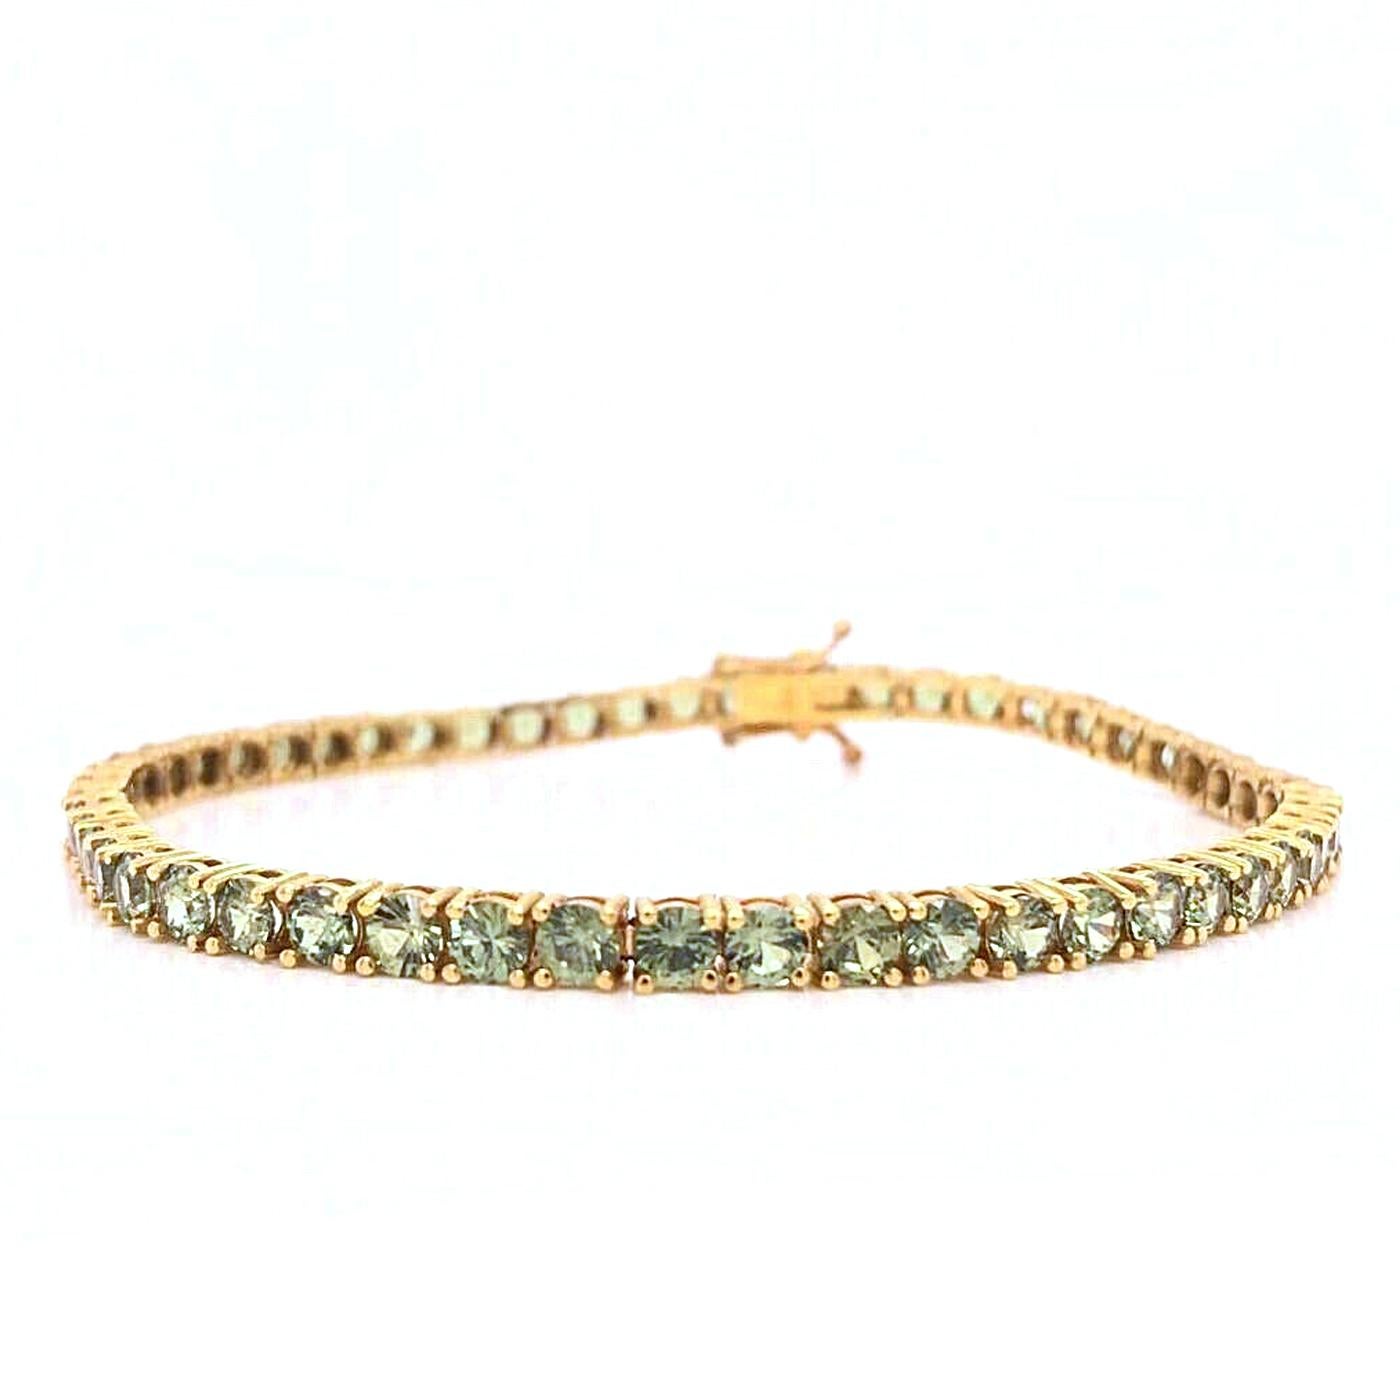 5.80ct 18ct yellow gold tennis bracelet guaranteed g/h colour si purity natural diamonds